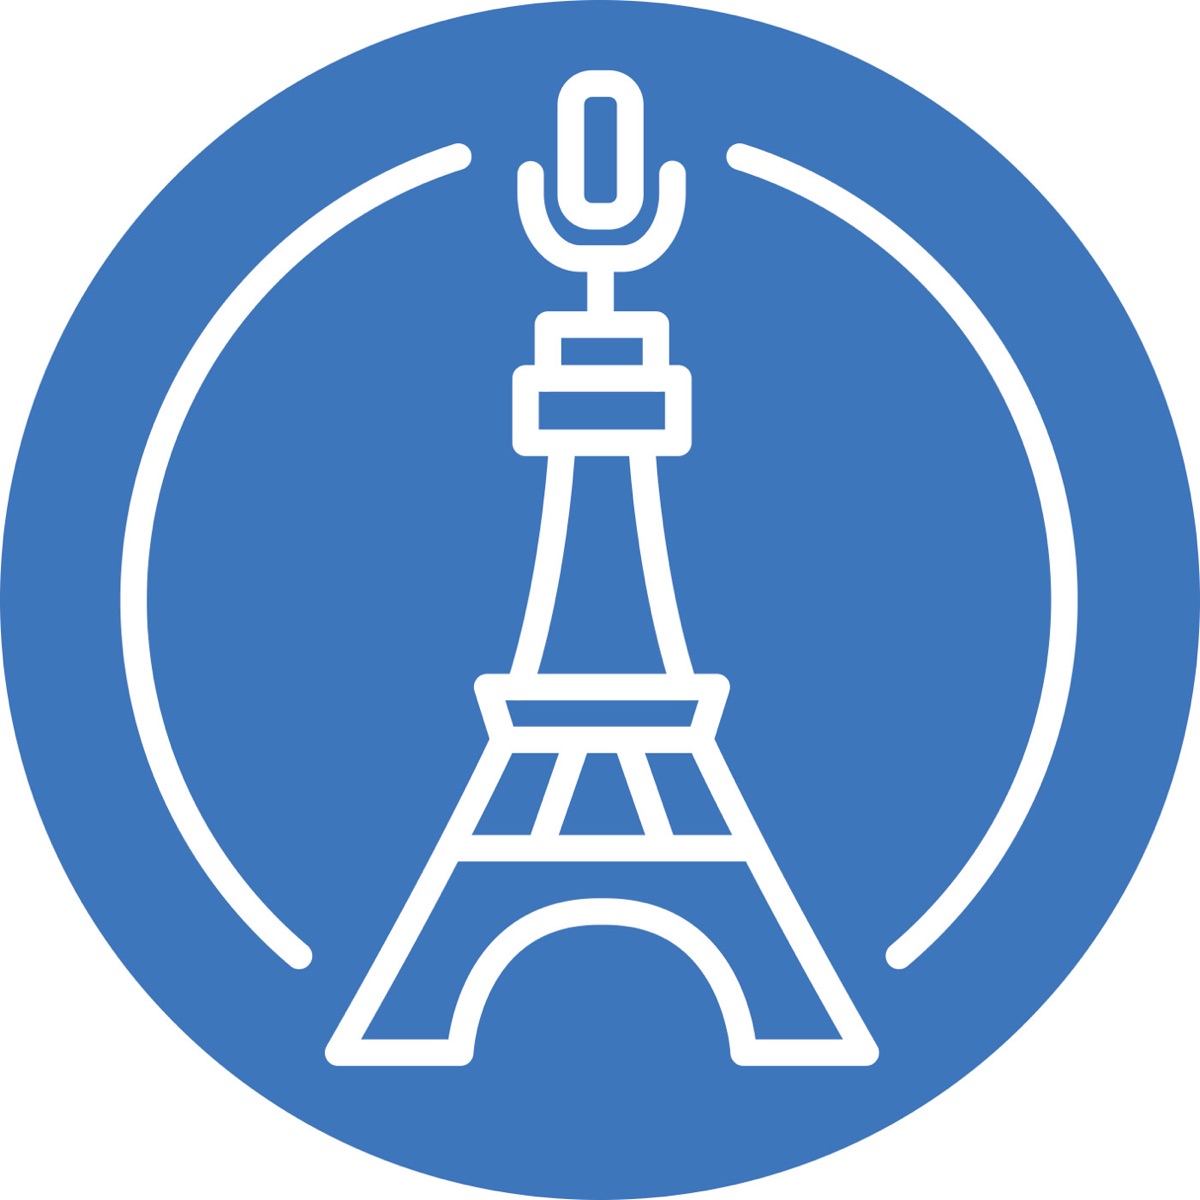 The Earful Tower logo